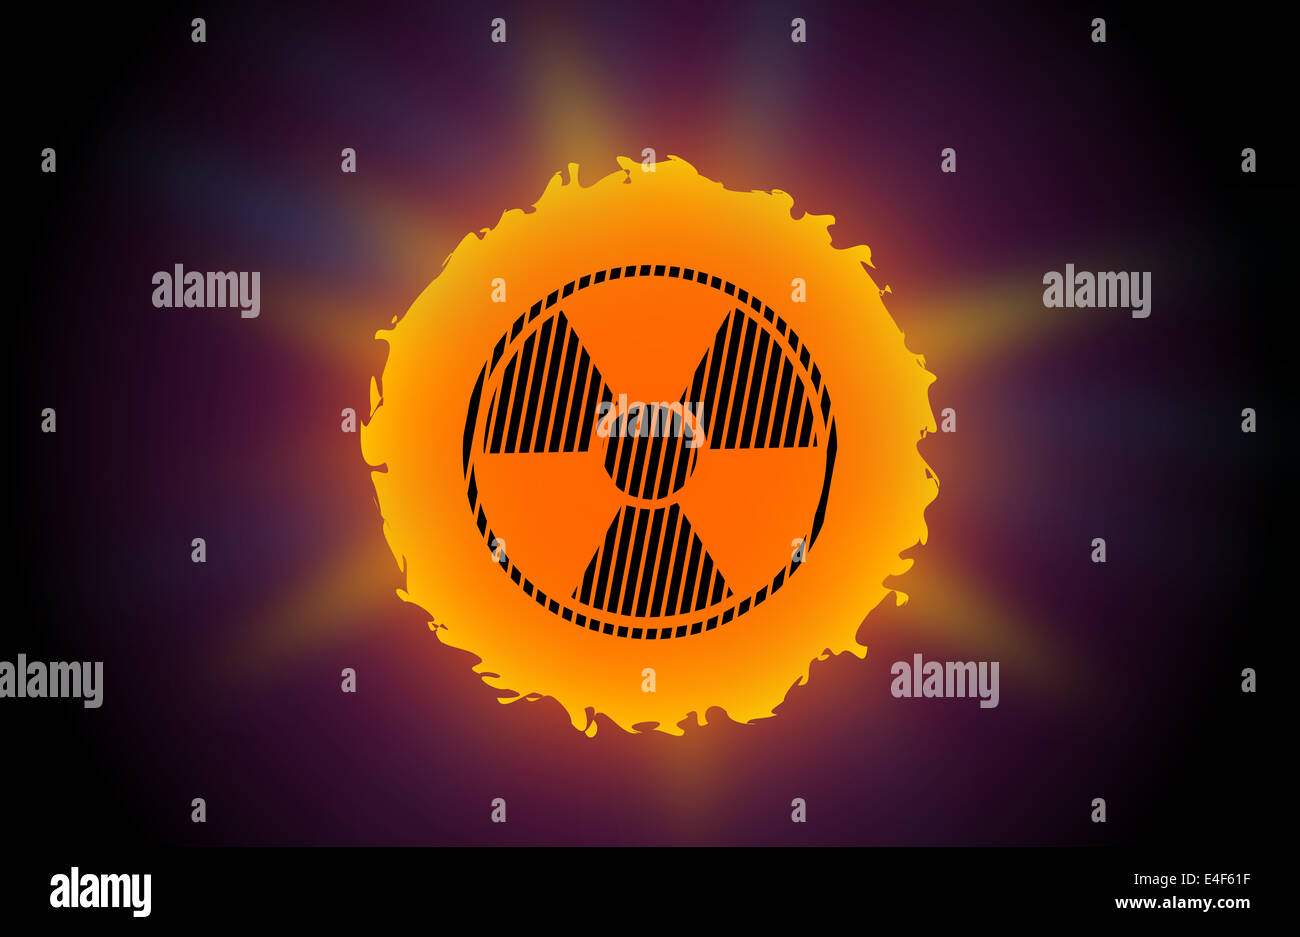 Drawn sun with radioactive symbol on it Stock Photo